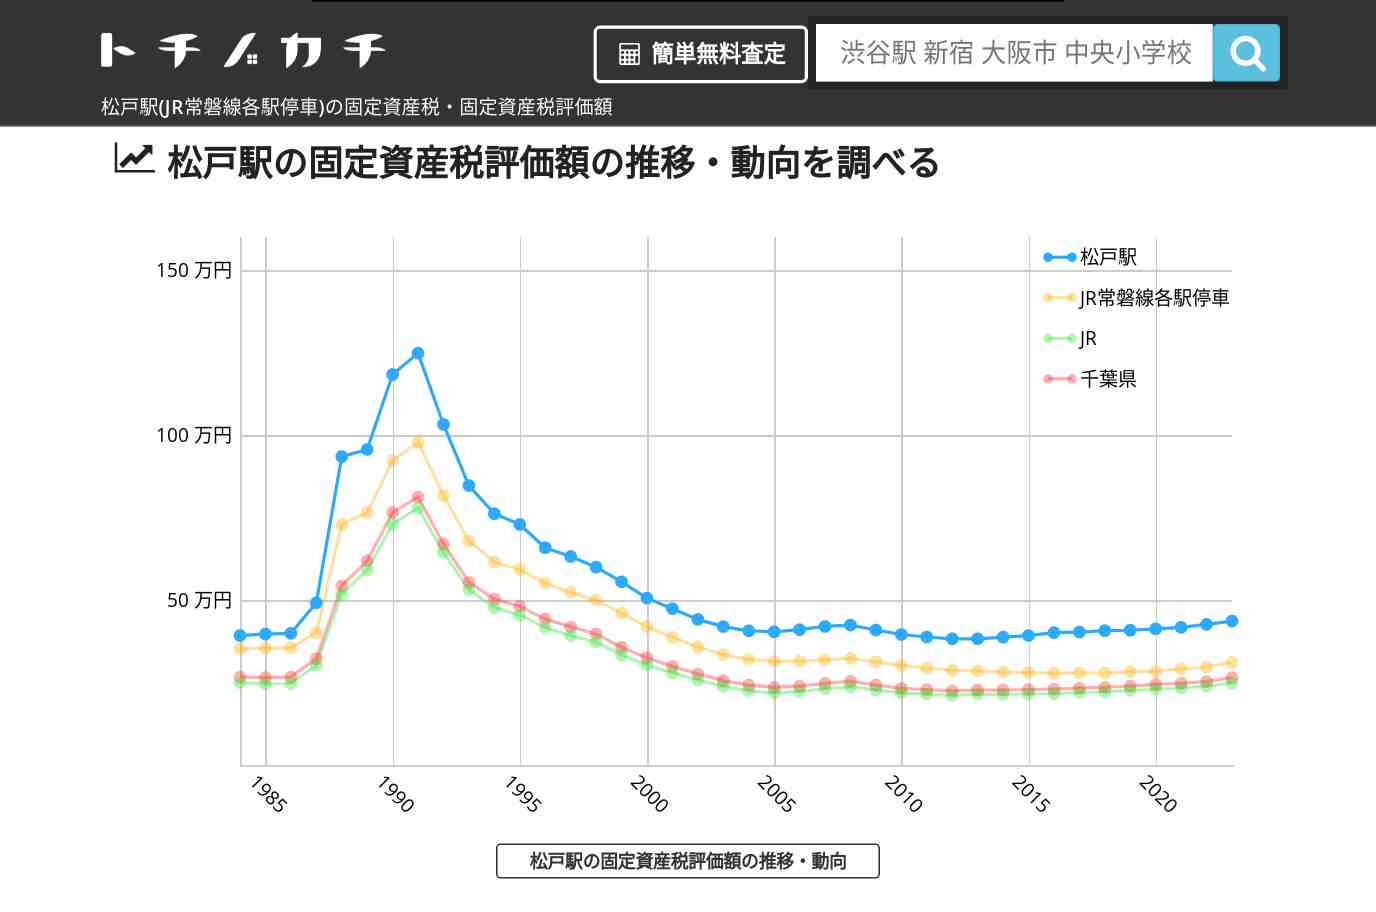 松戸駅(JR常磐線各駅停車)の固定資産税・固定資産税評価額 | トチノカチ